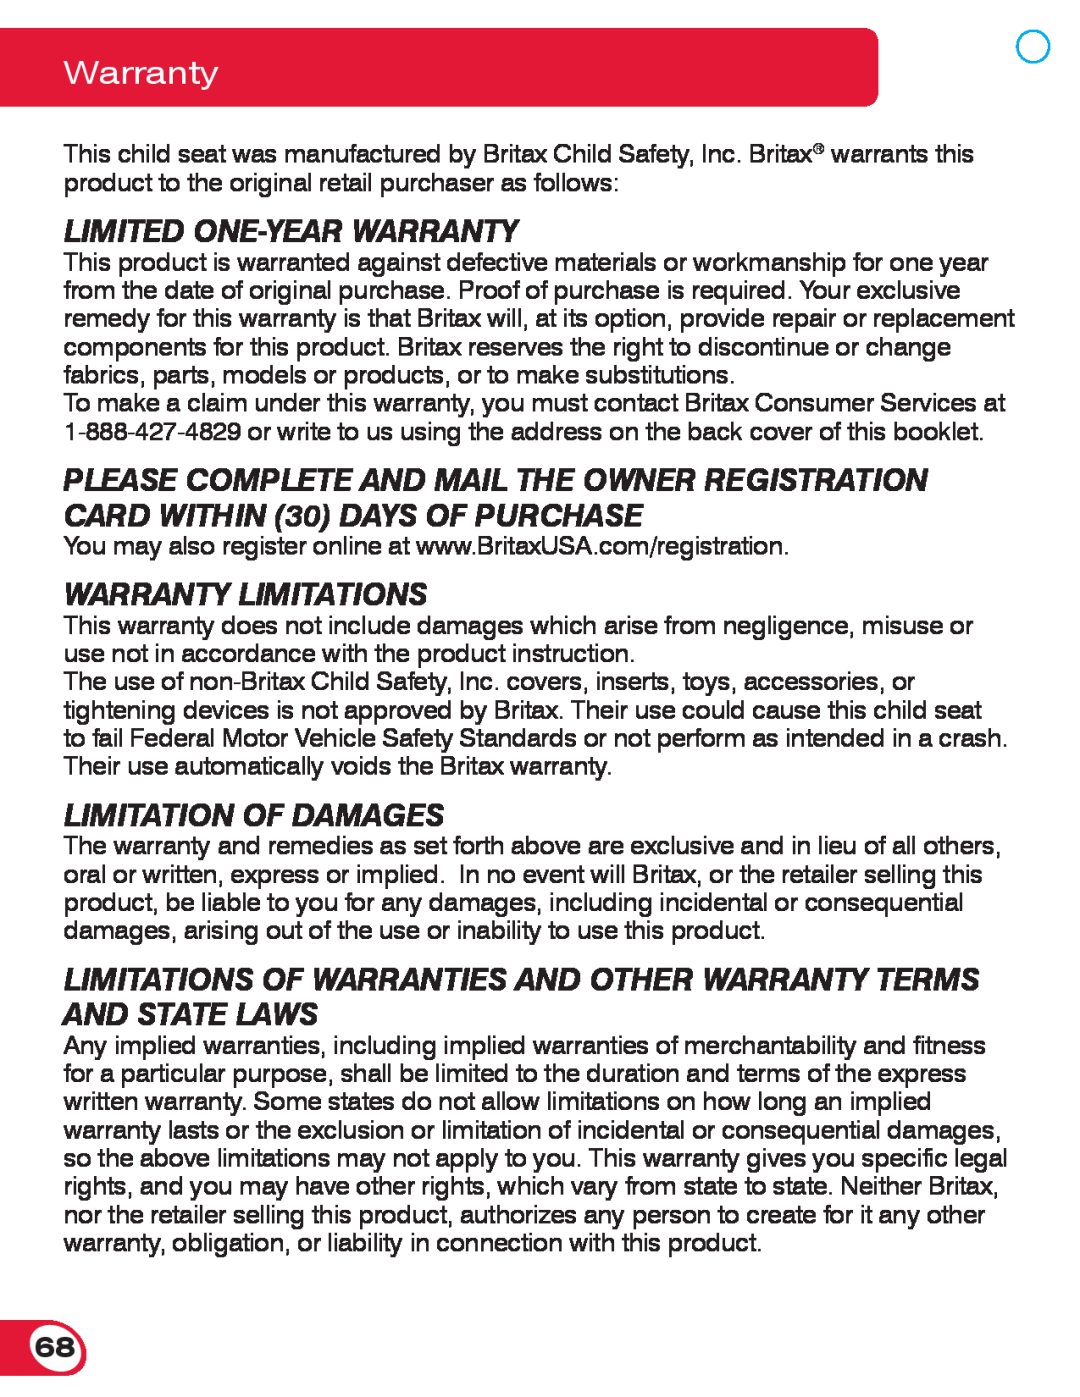 Britax 70 CS manual Limited One-Year Warranty, Warranty Limitations, Limitation Of Damages 